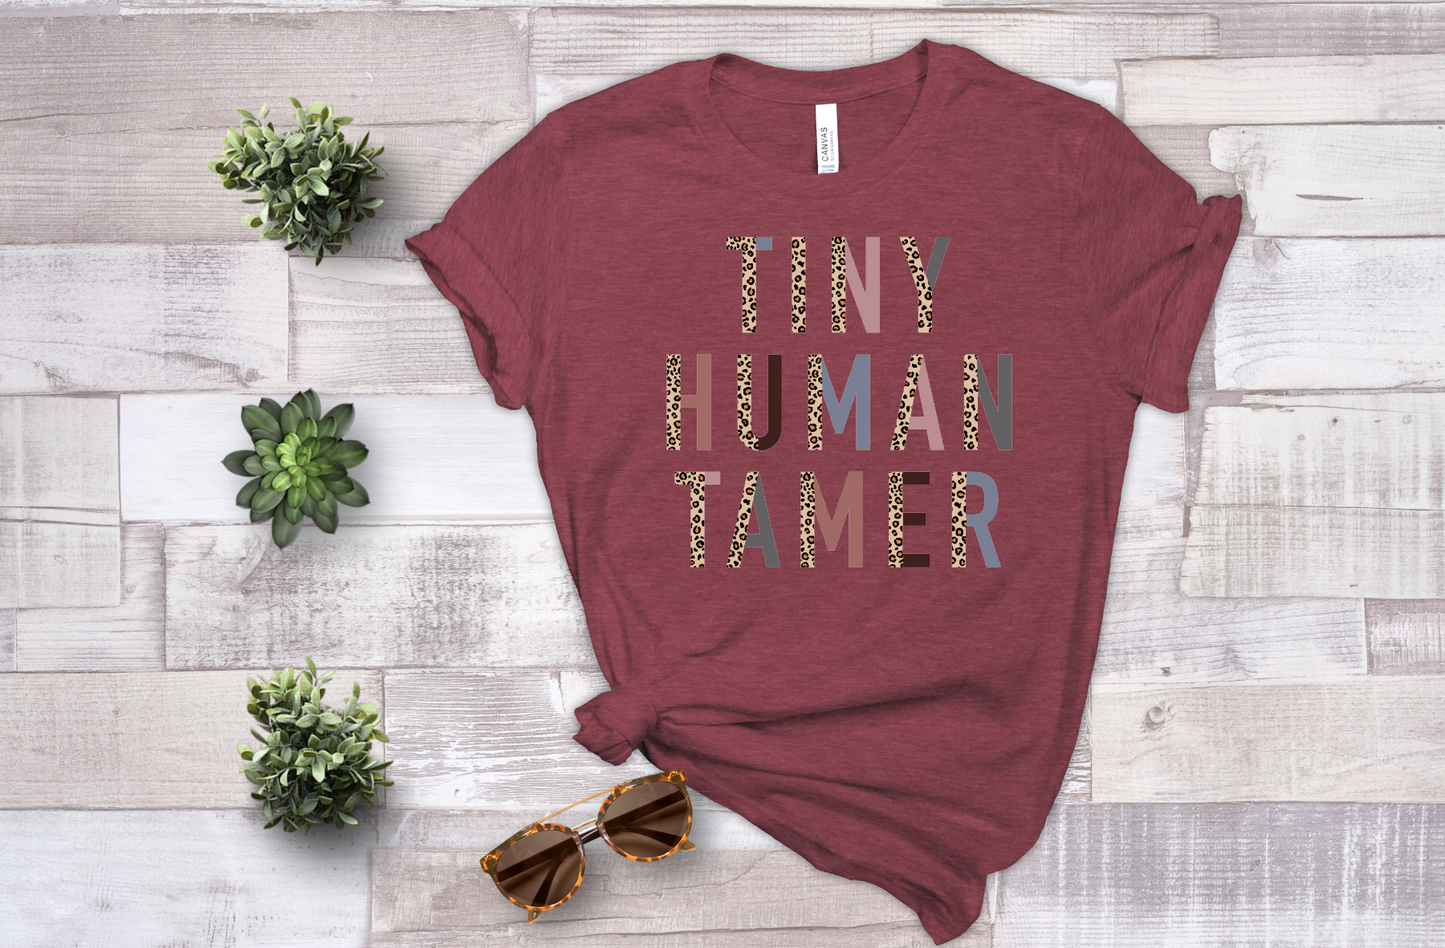 Tiny Human Tamer - Sublimation